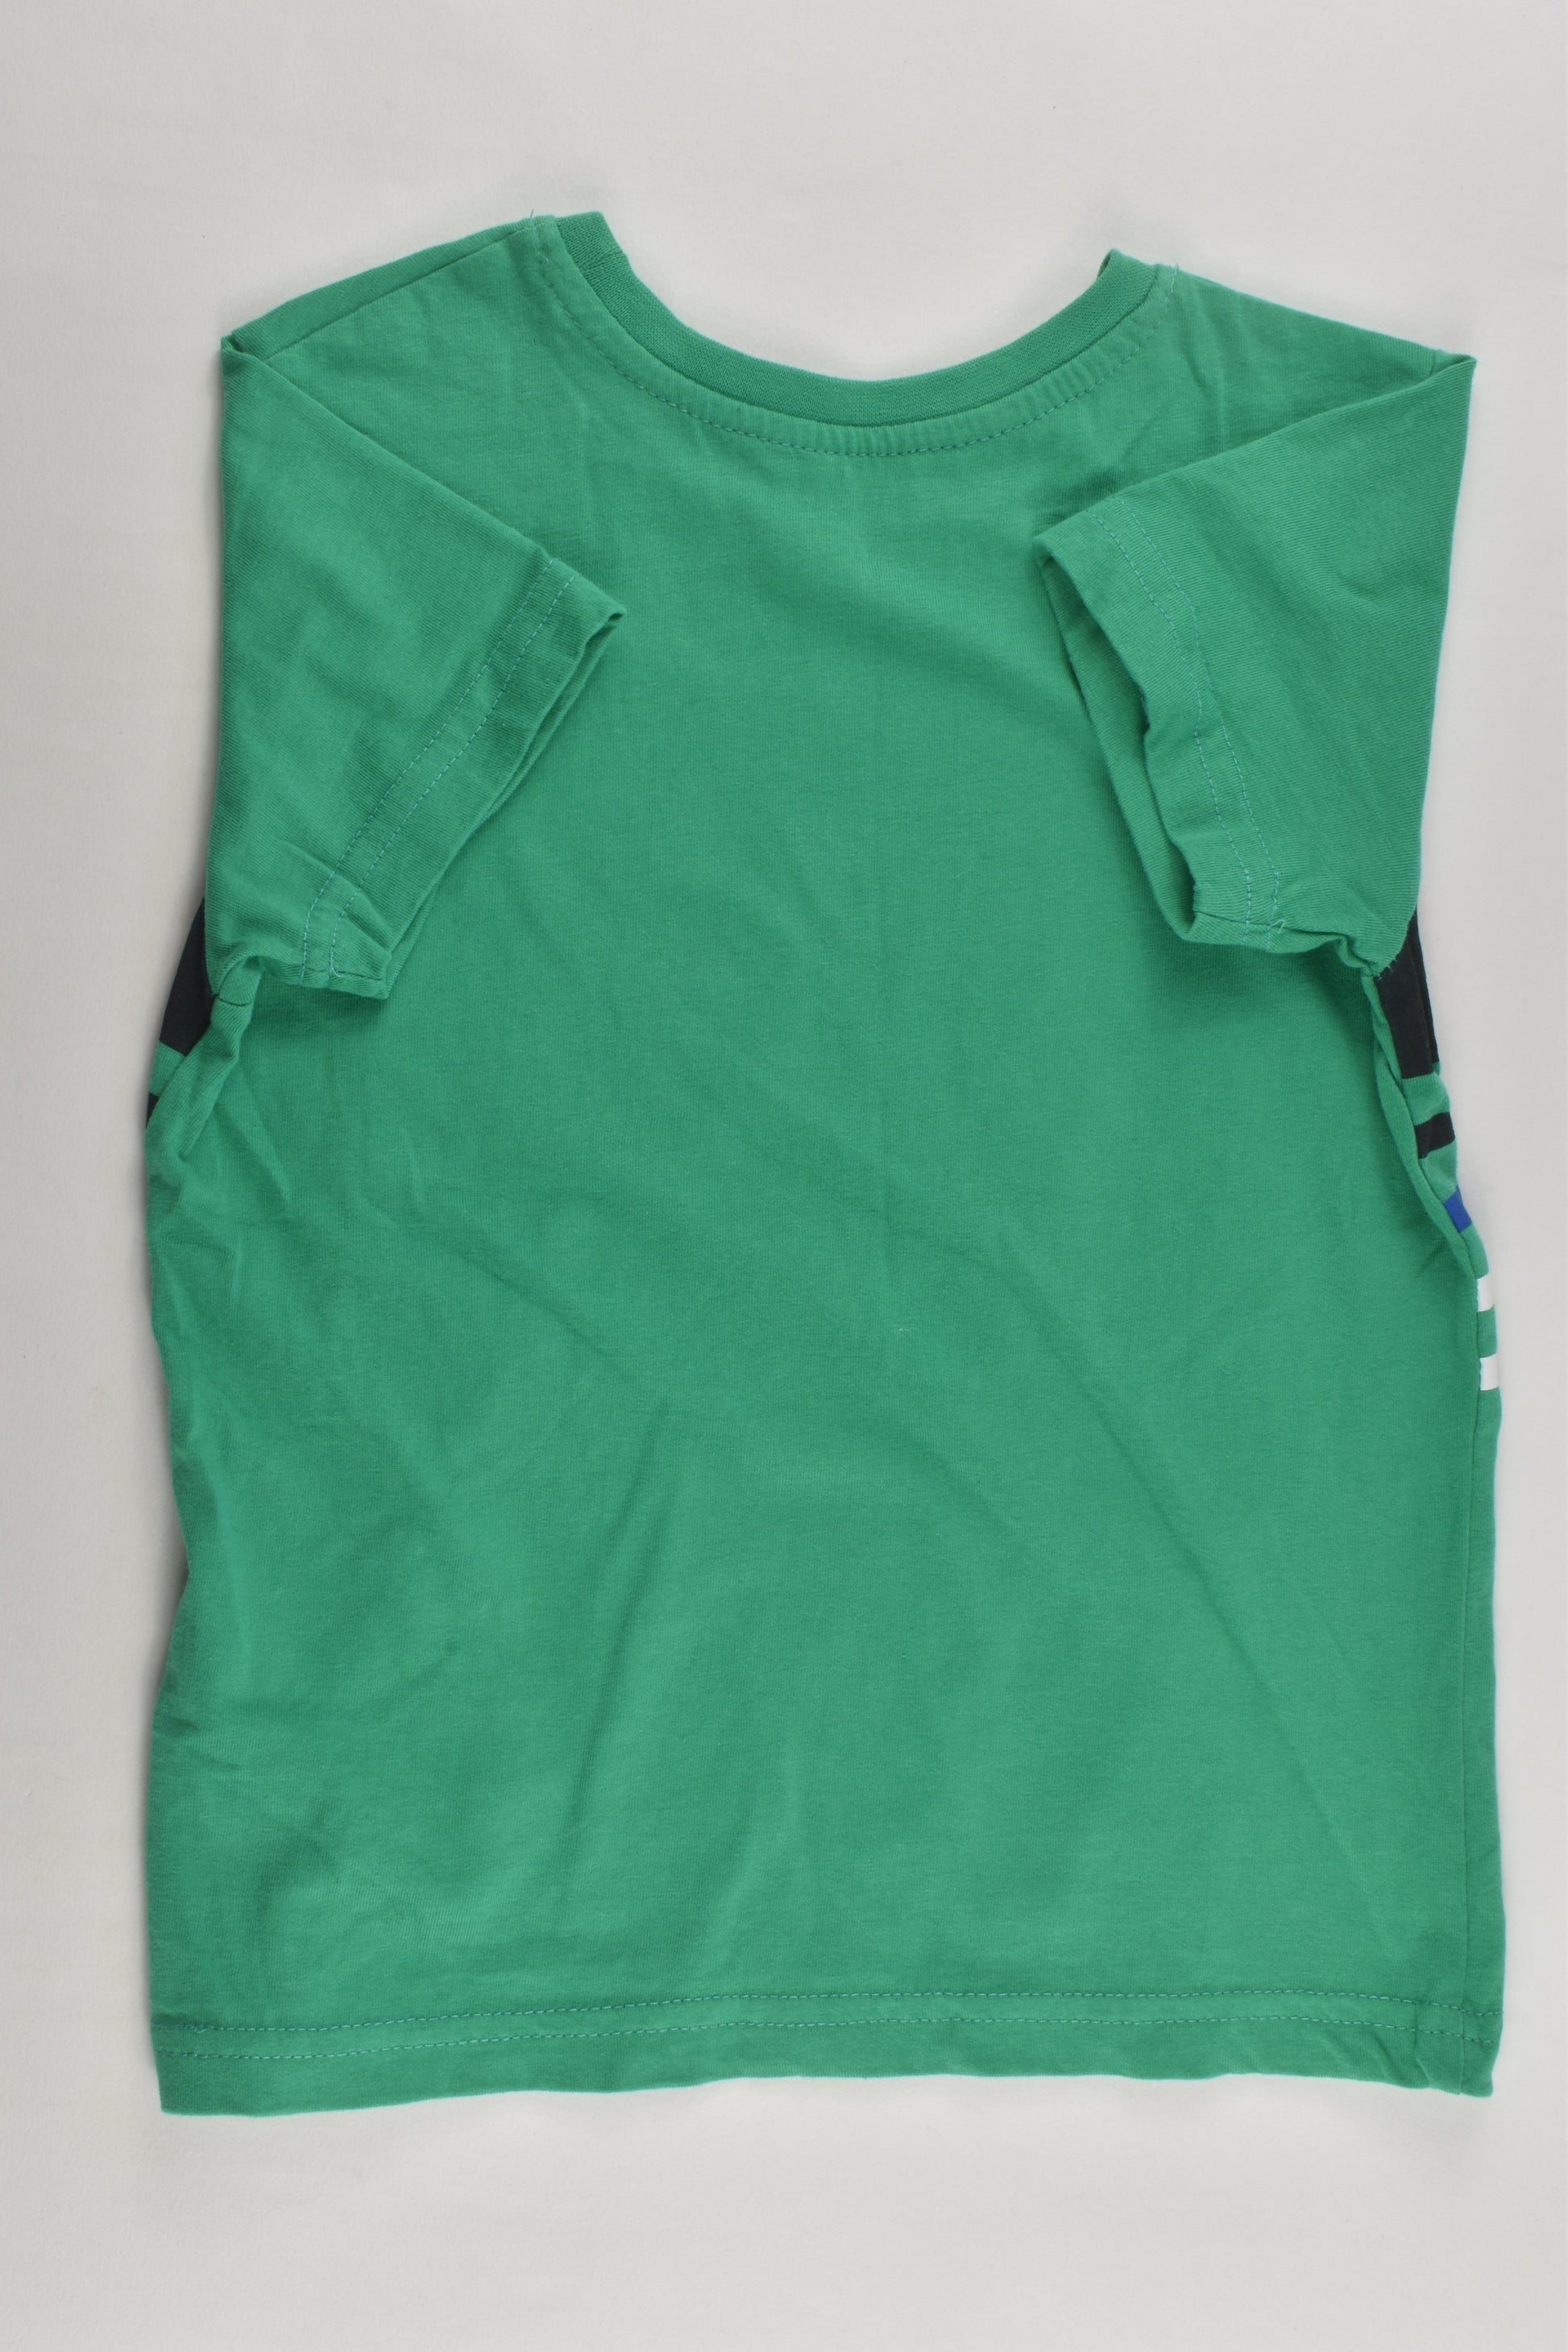 Primark Size 4-5 (110 cm) 'No Rules' T-shirt